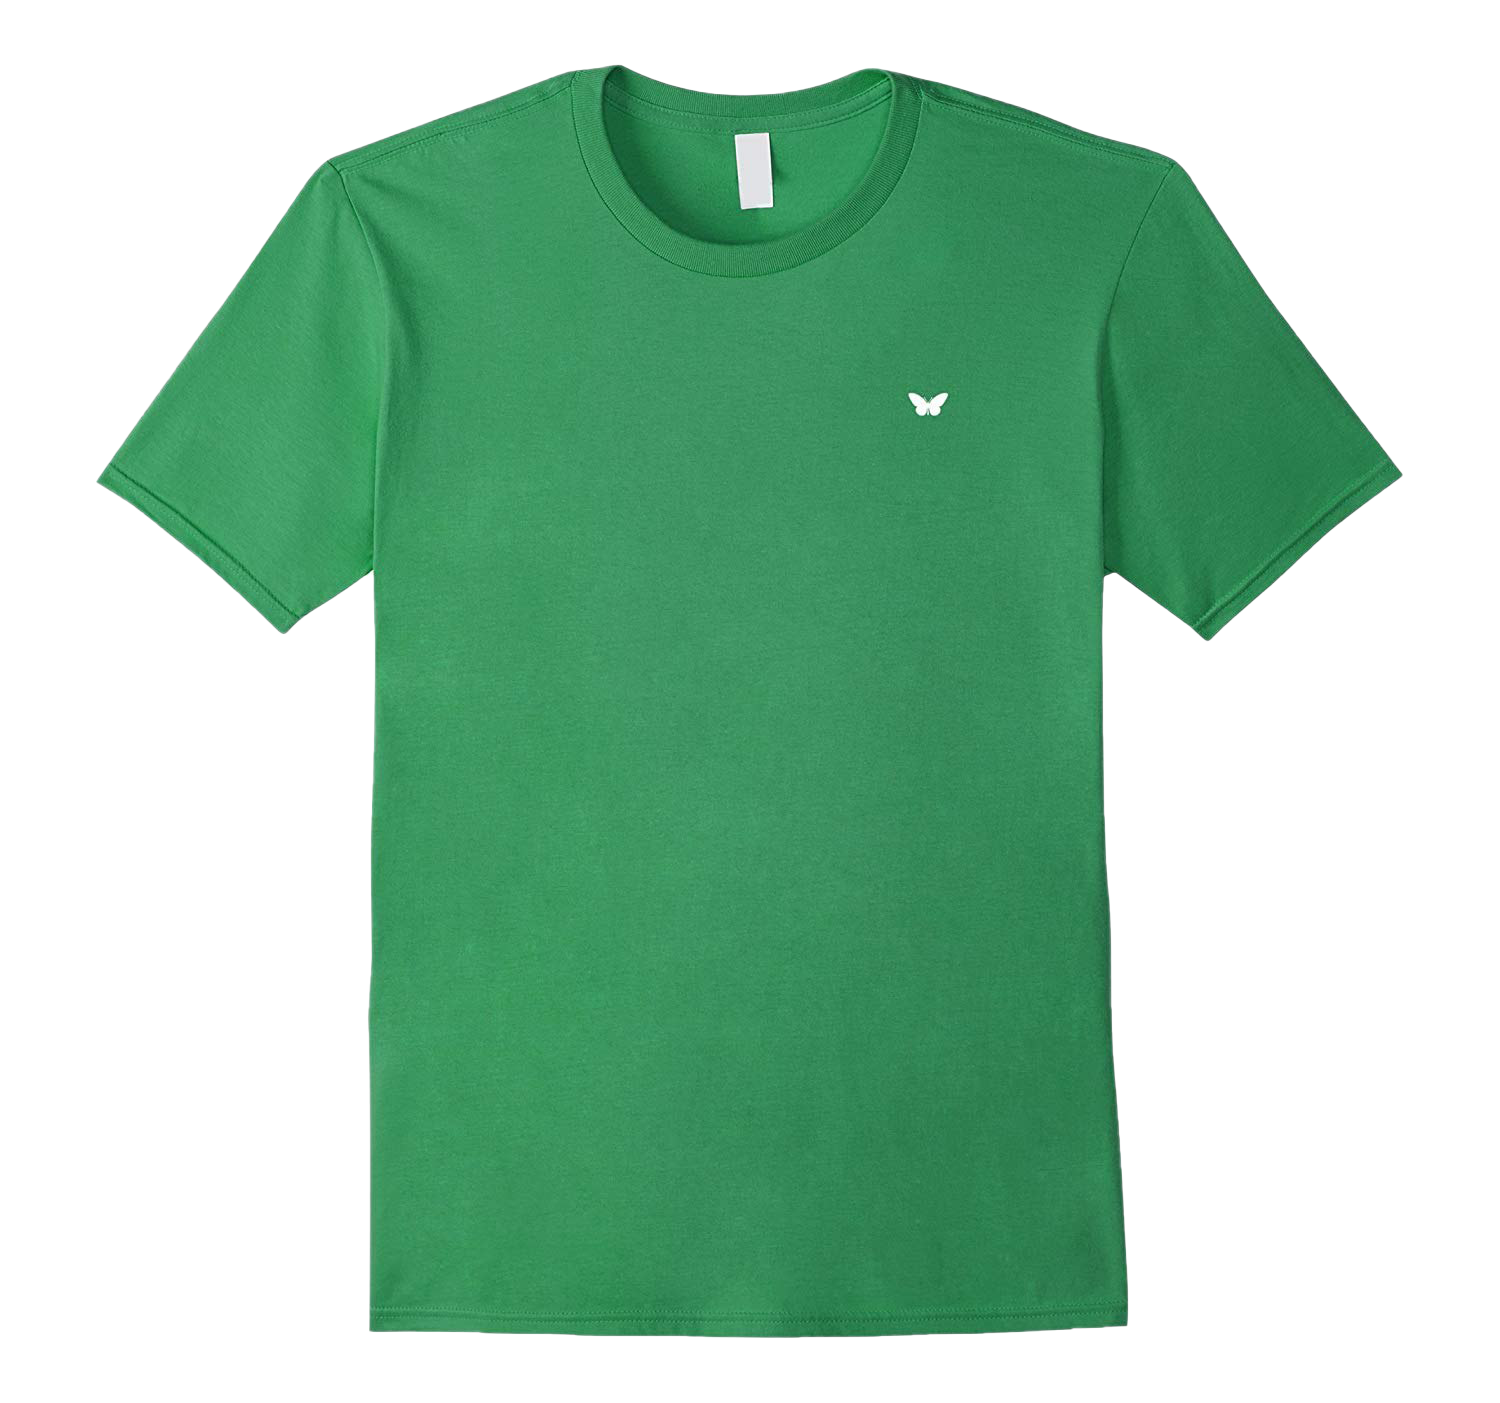 Plain Green T-Shirt PNG Image